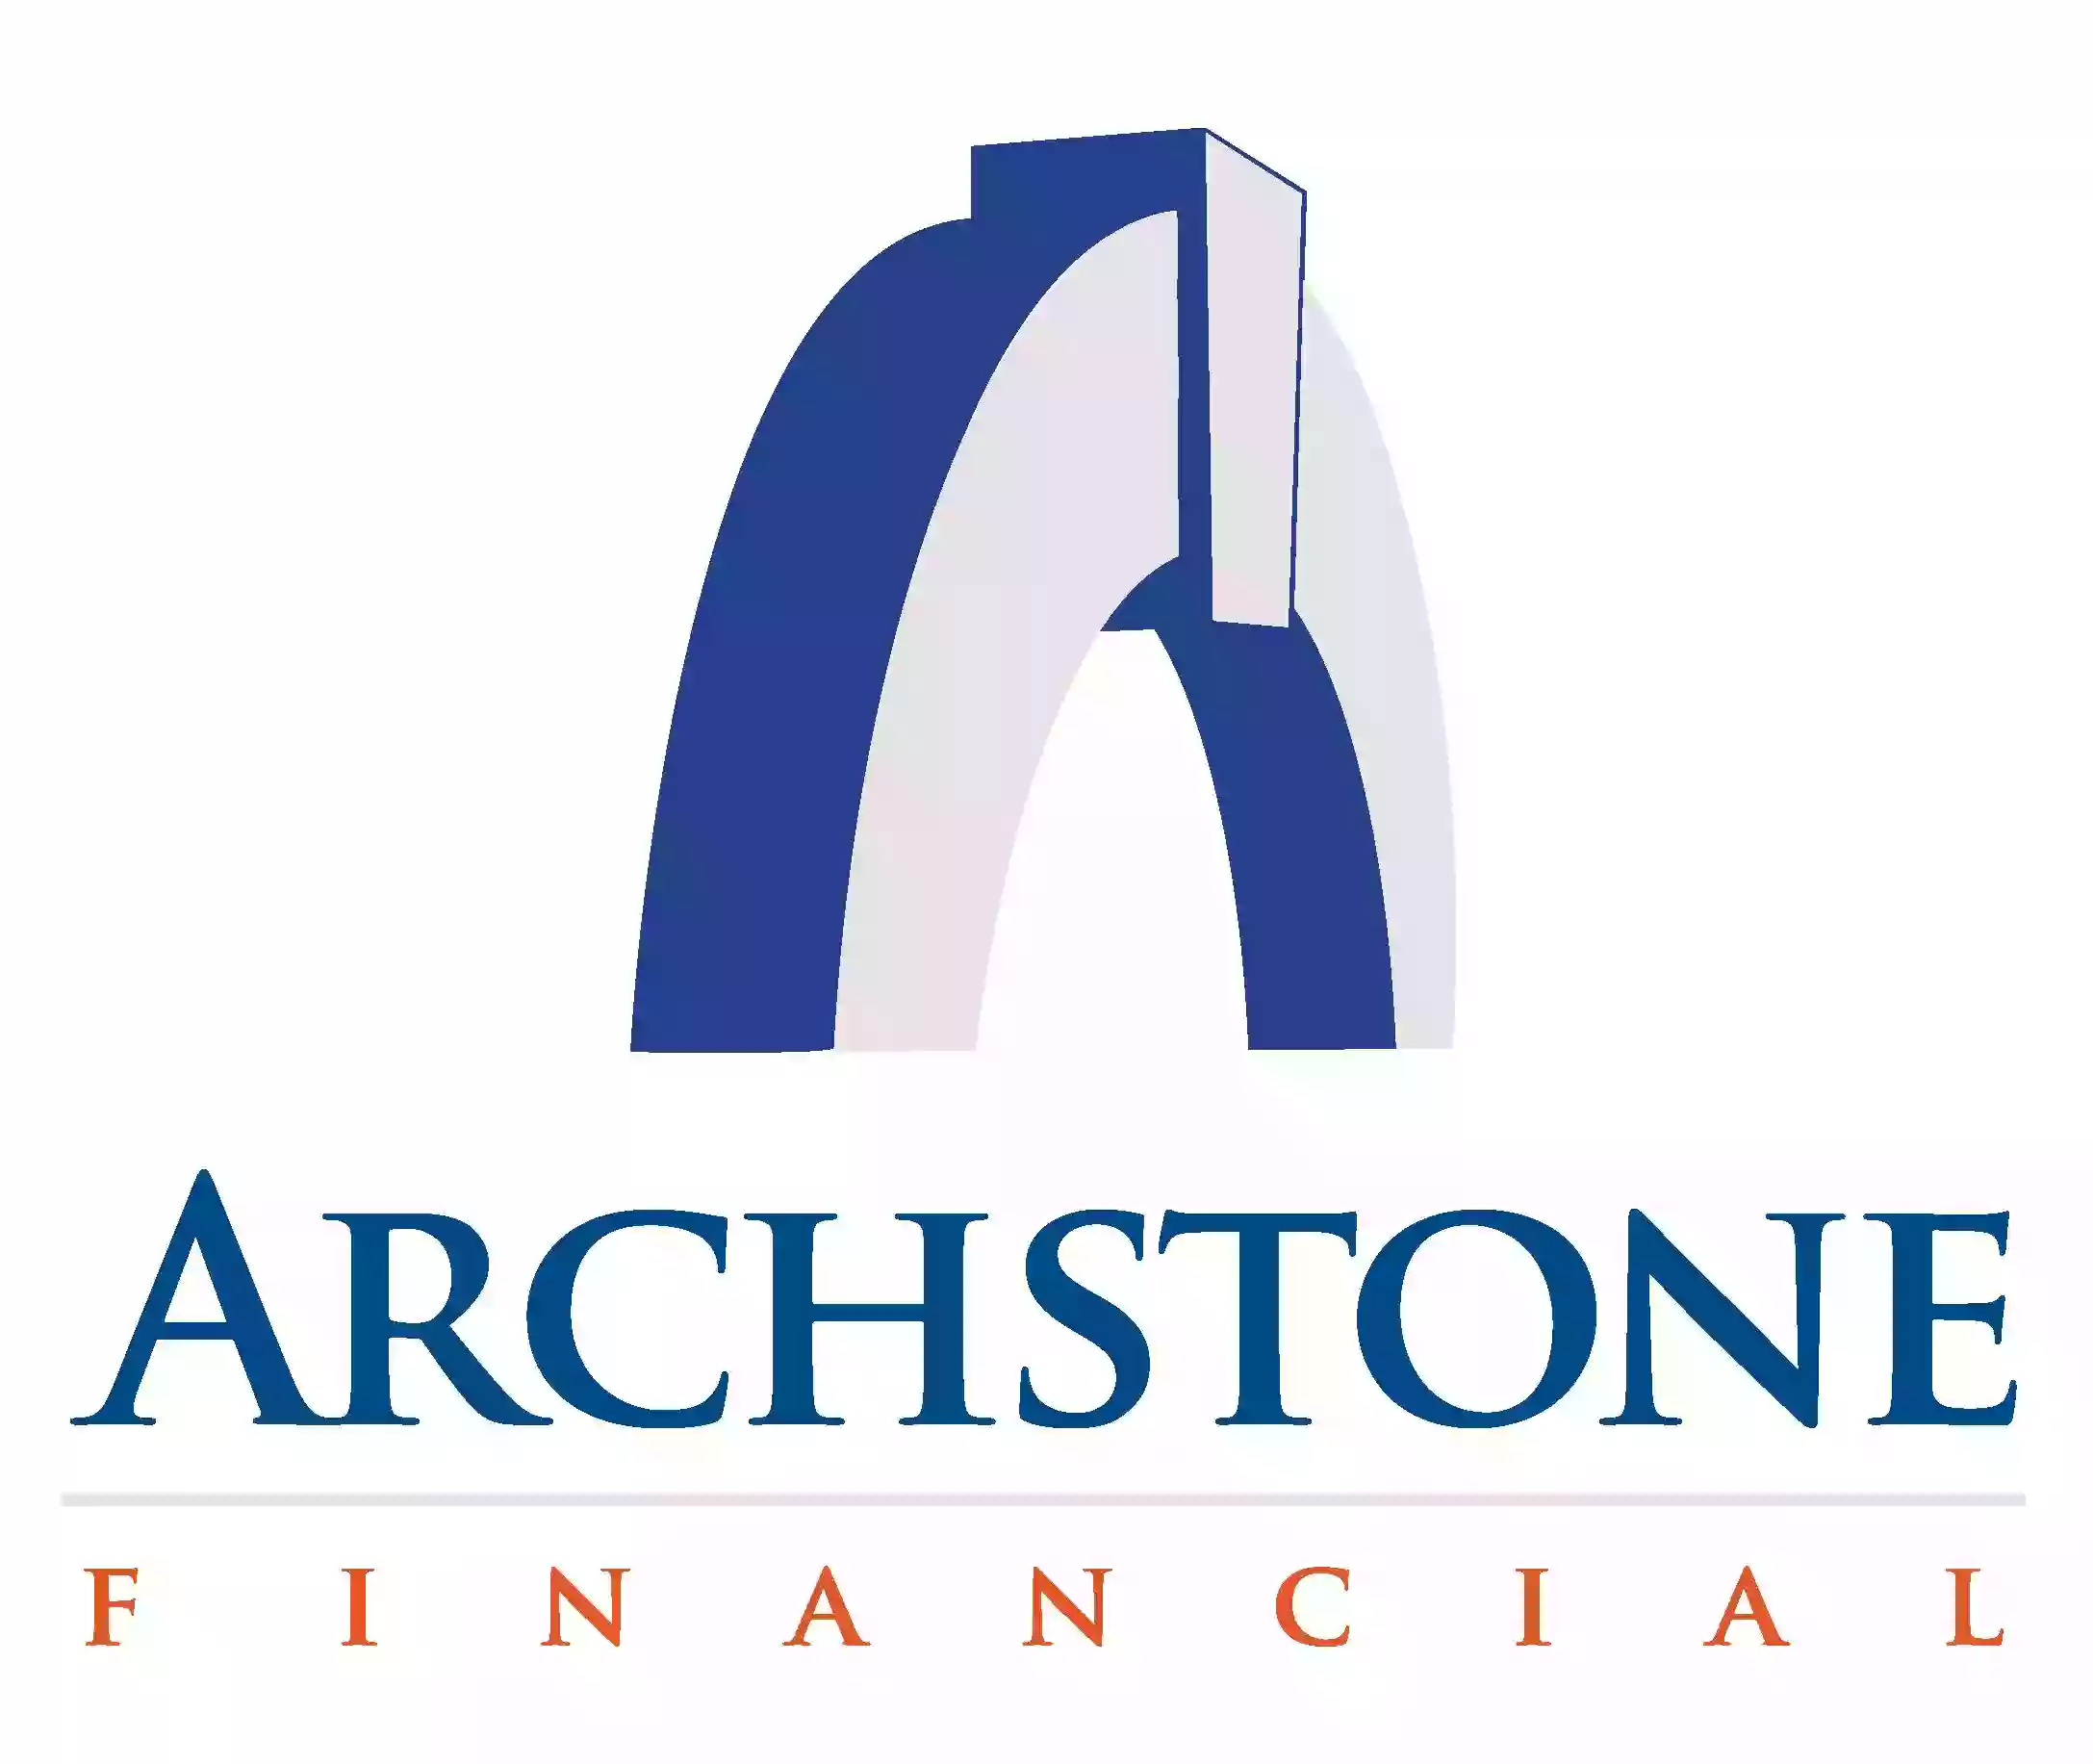 Archstone Financial